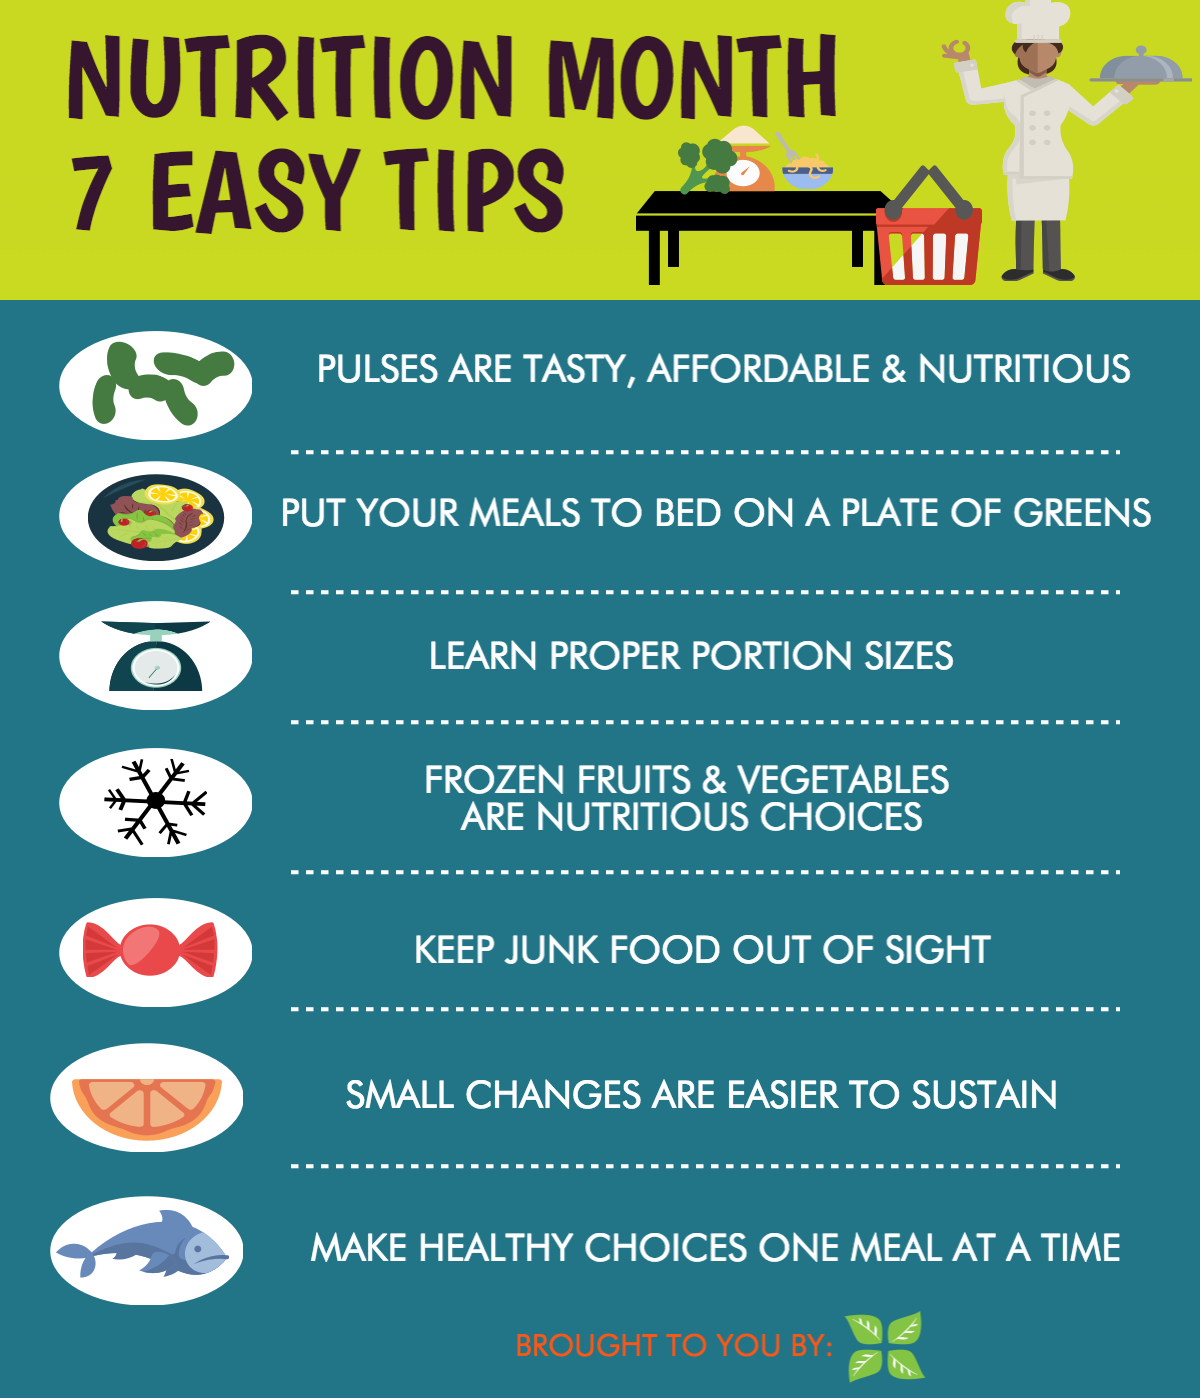 Proper nutrition tips